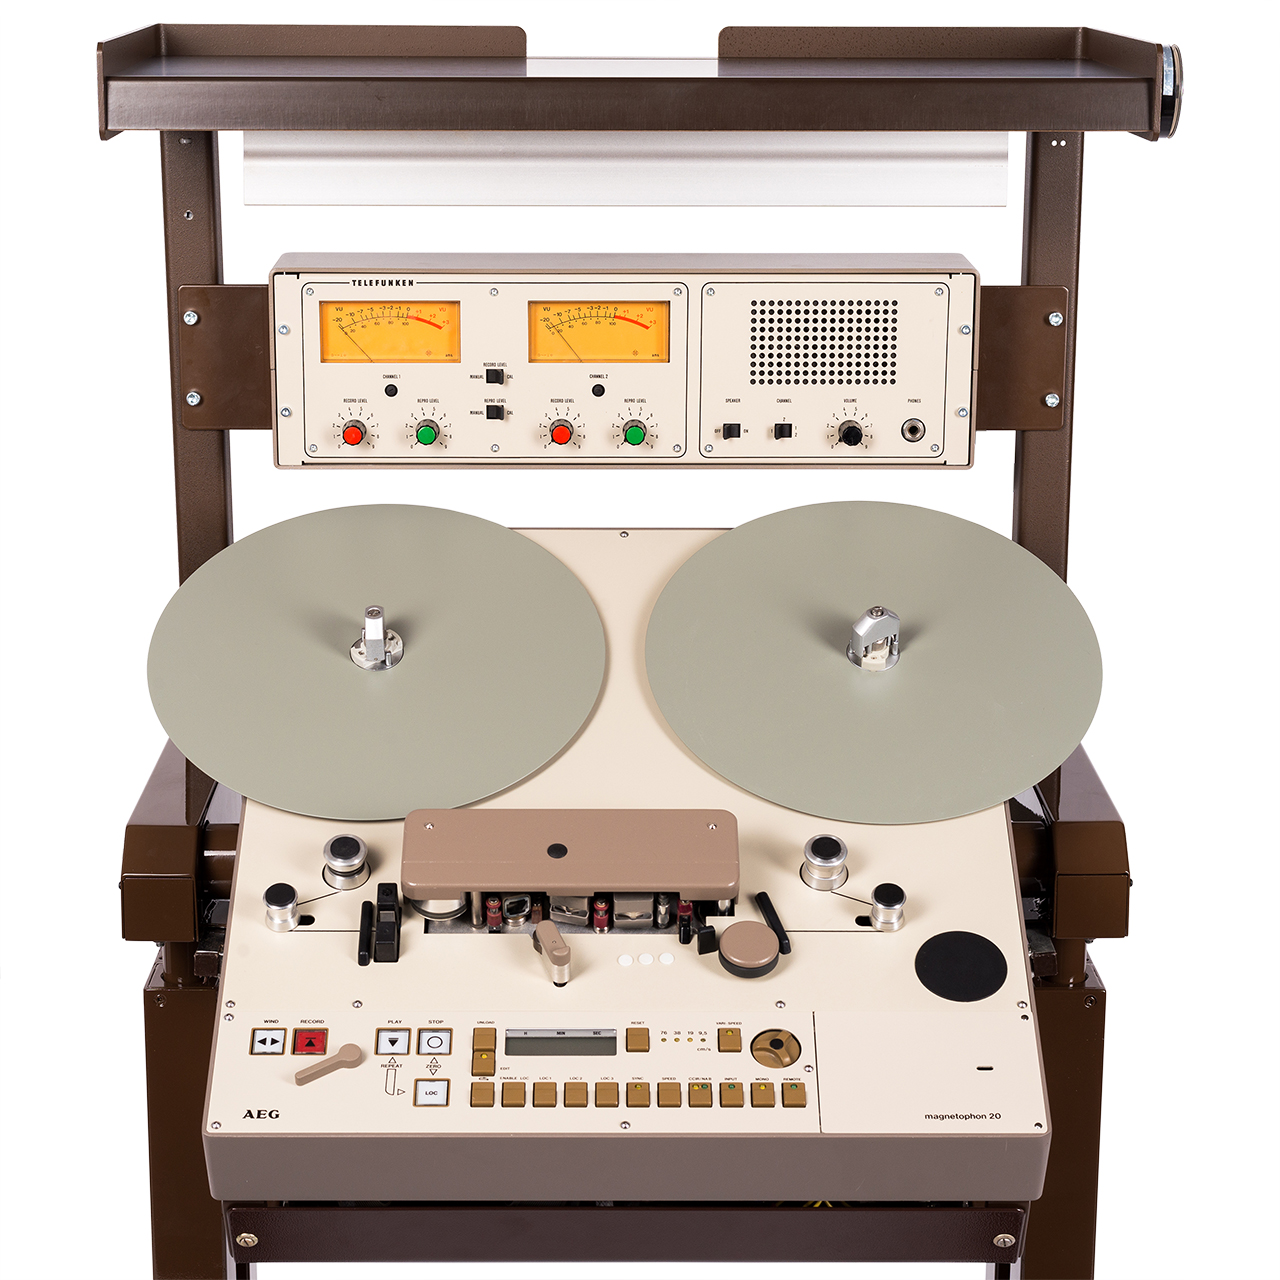 Telefunken Magnetophon M20 VU stereo 1/4" reel-to-reel tape recorder - renovated